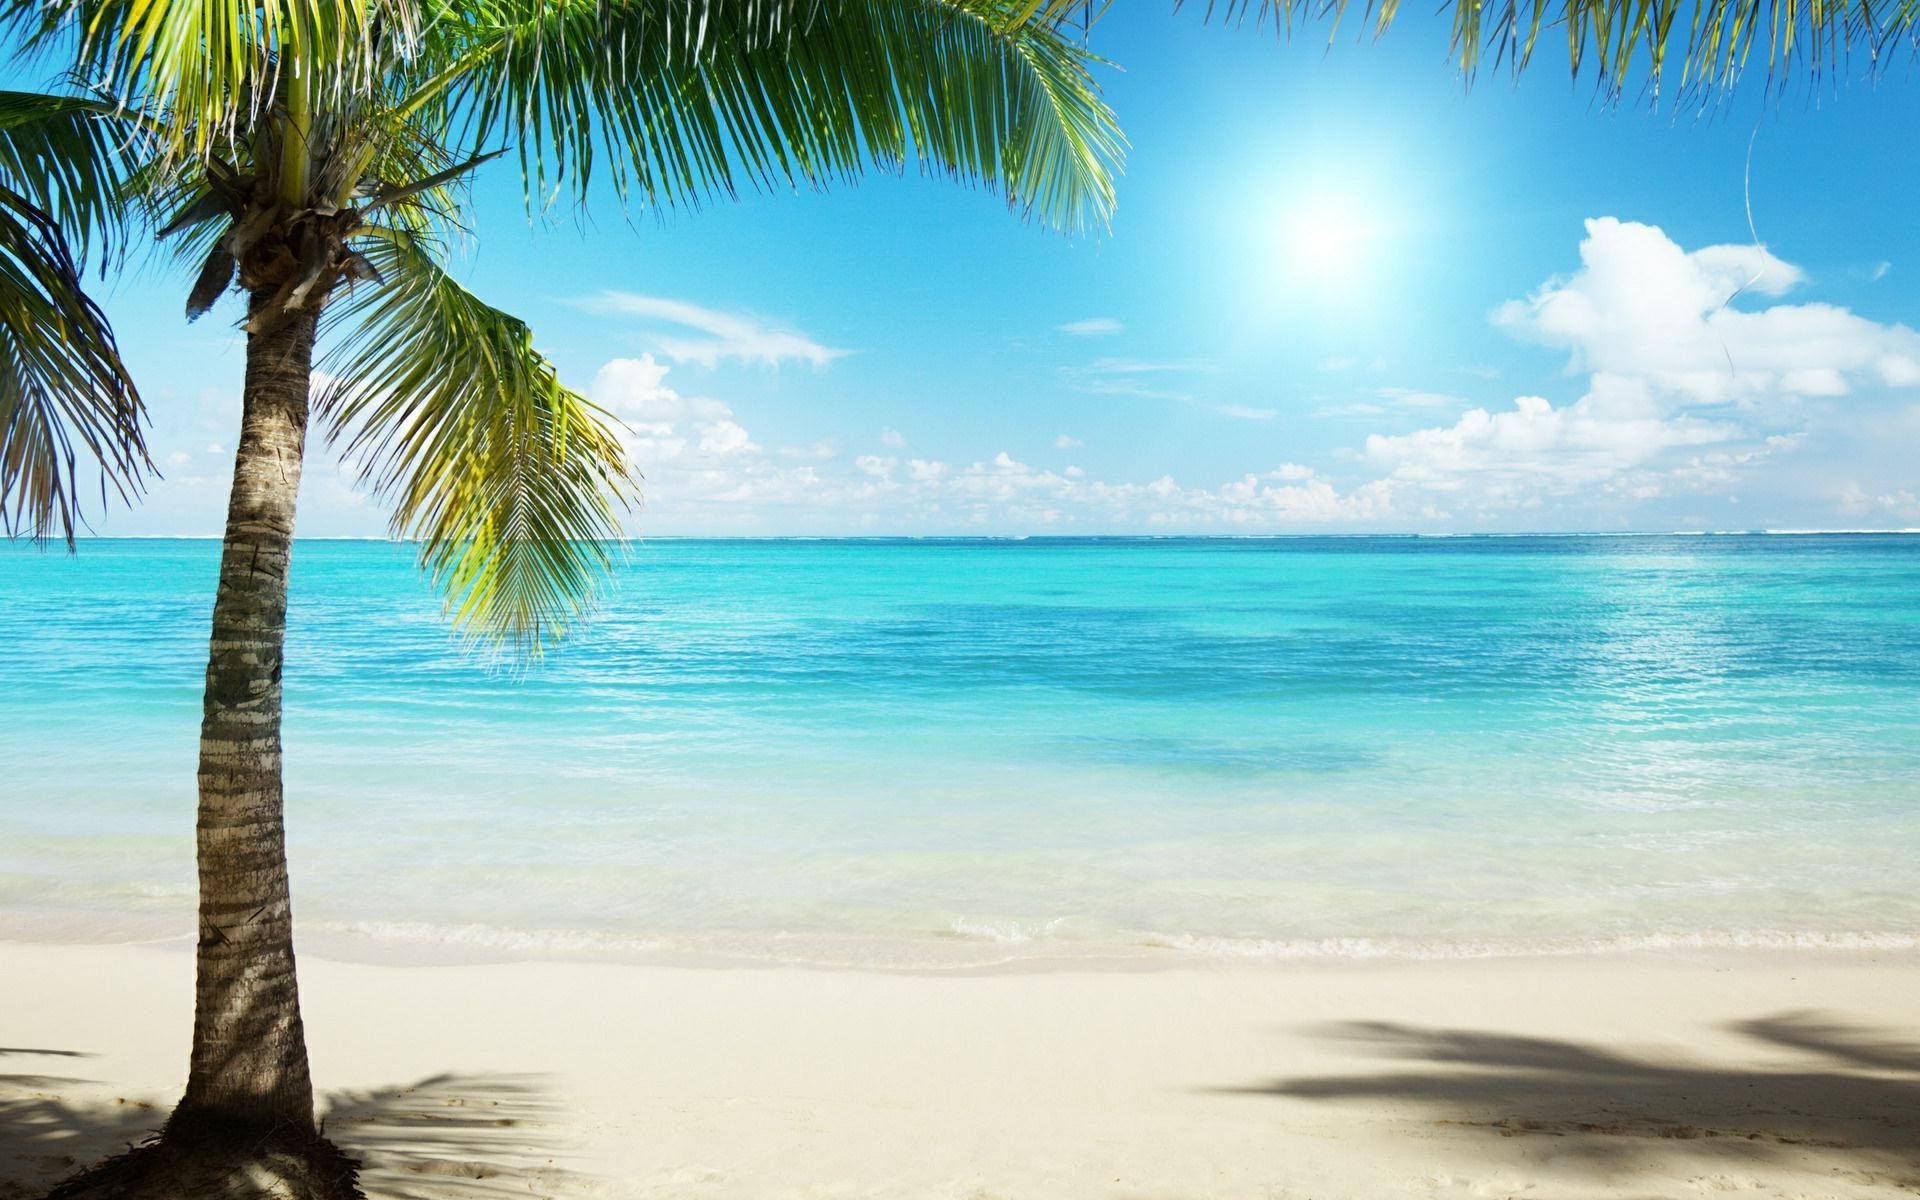 Tropical Beach Backgrounds Hd Widescreen 11 HD Wallpapers